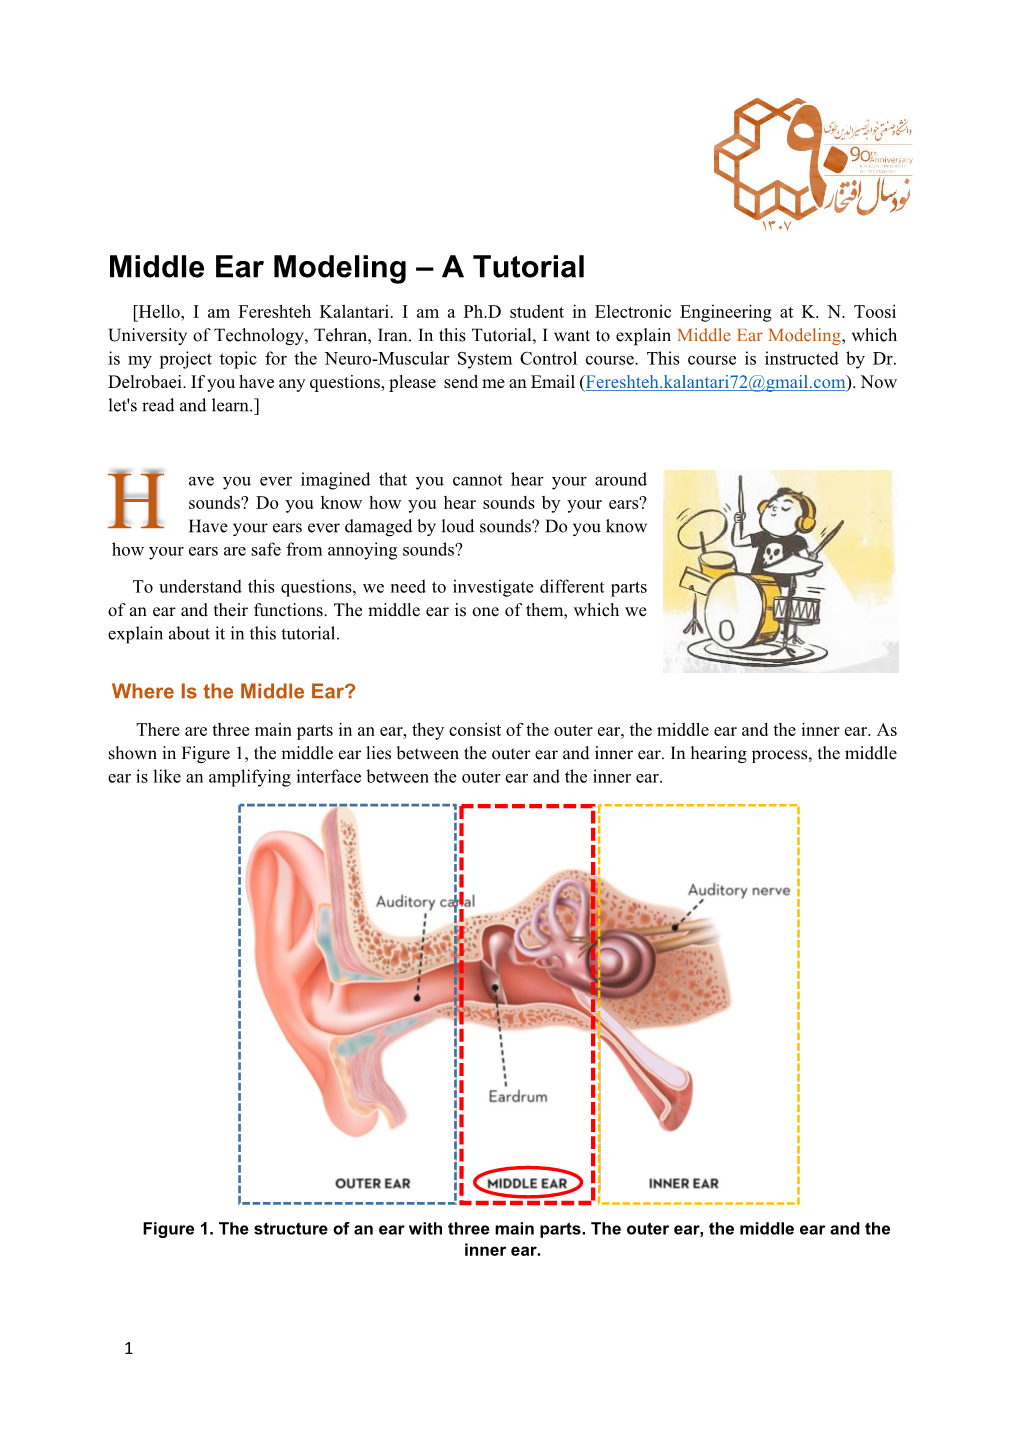 Middle Ear Modeling – a Tutorial